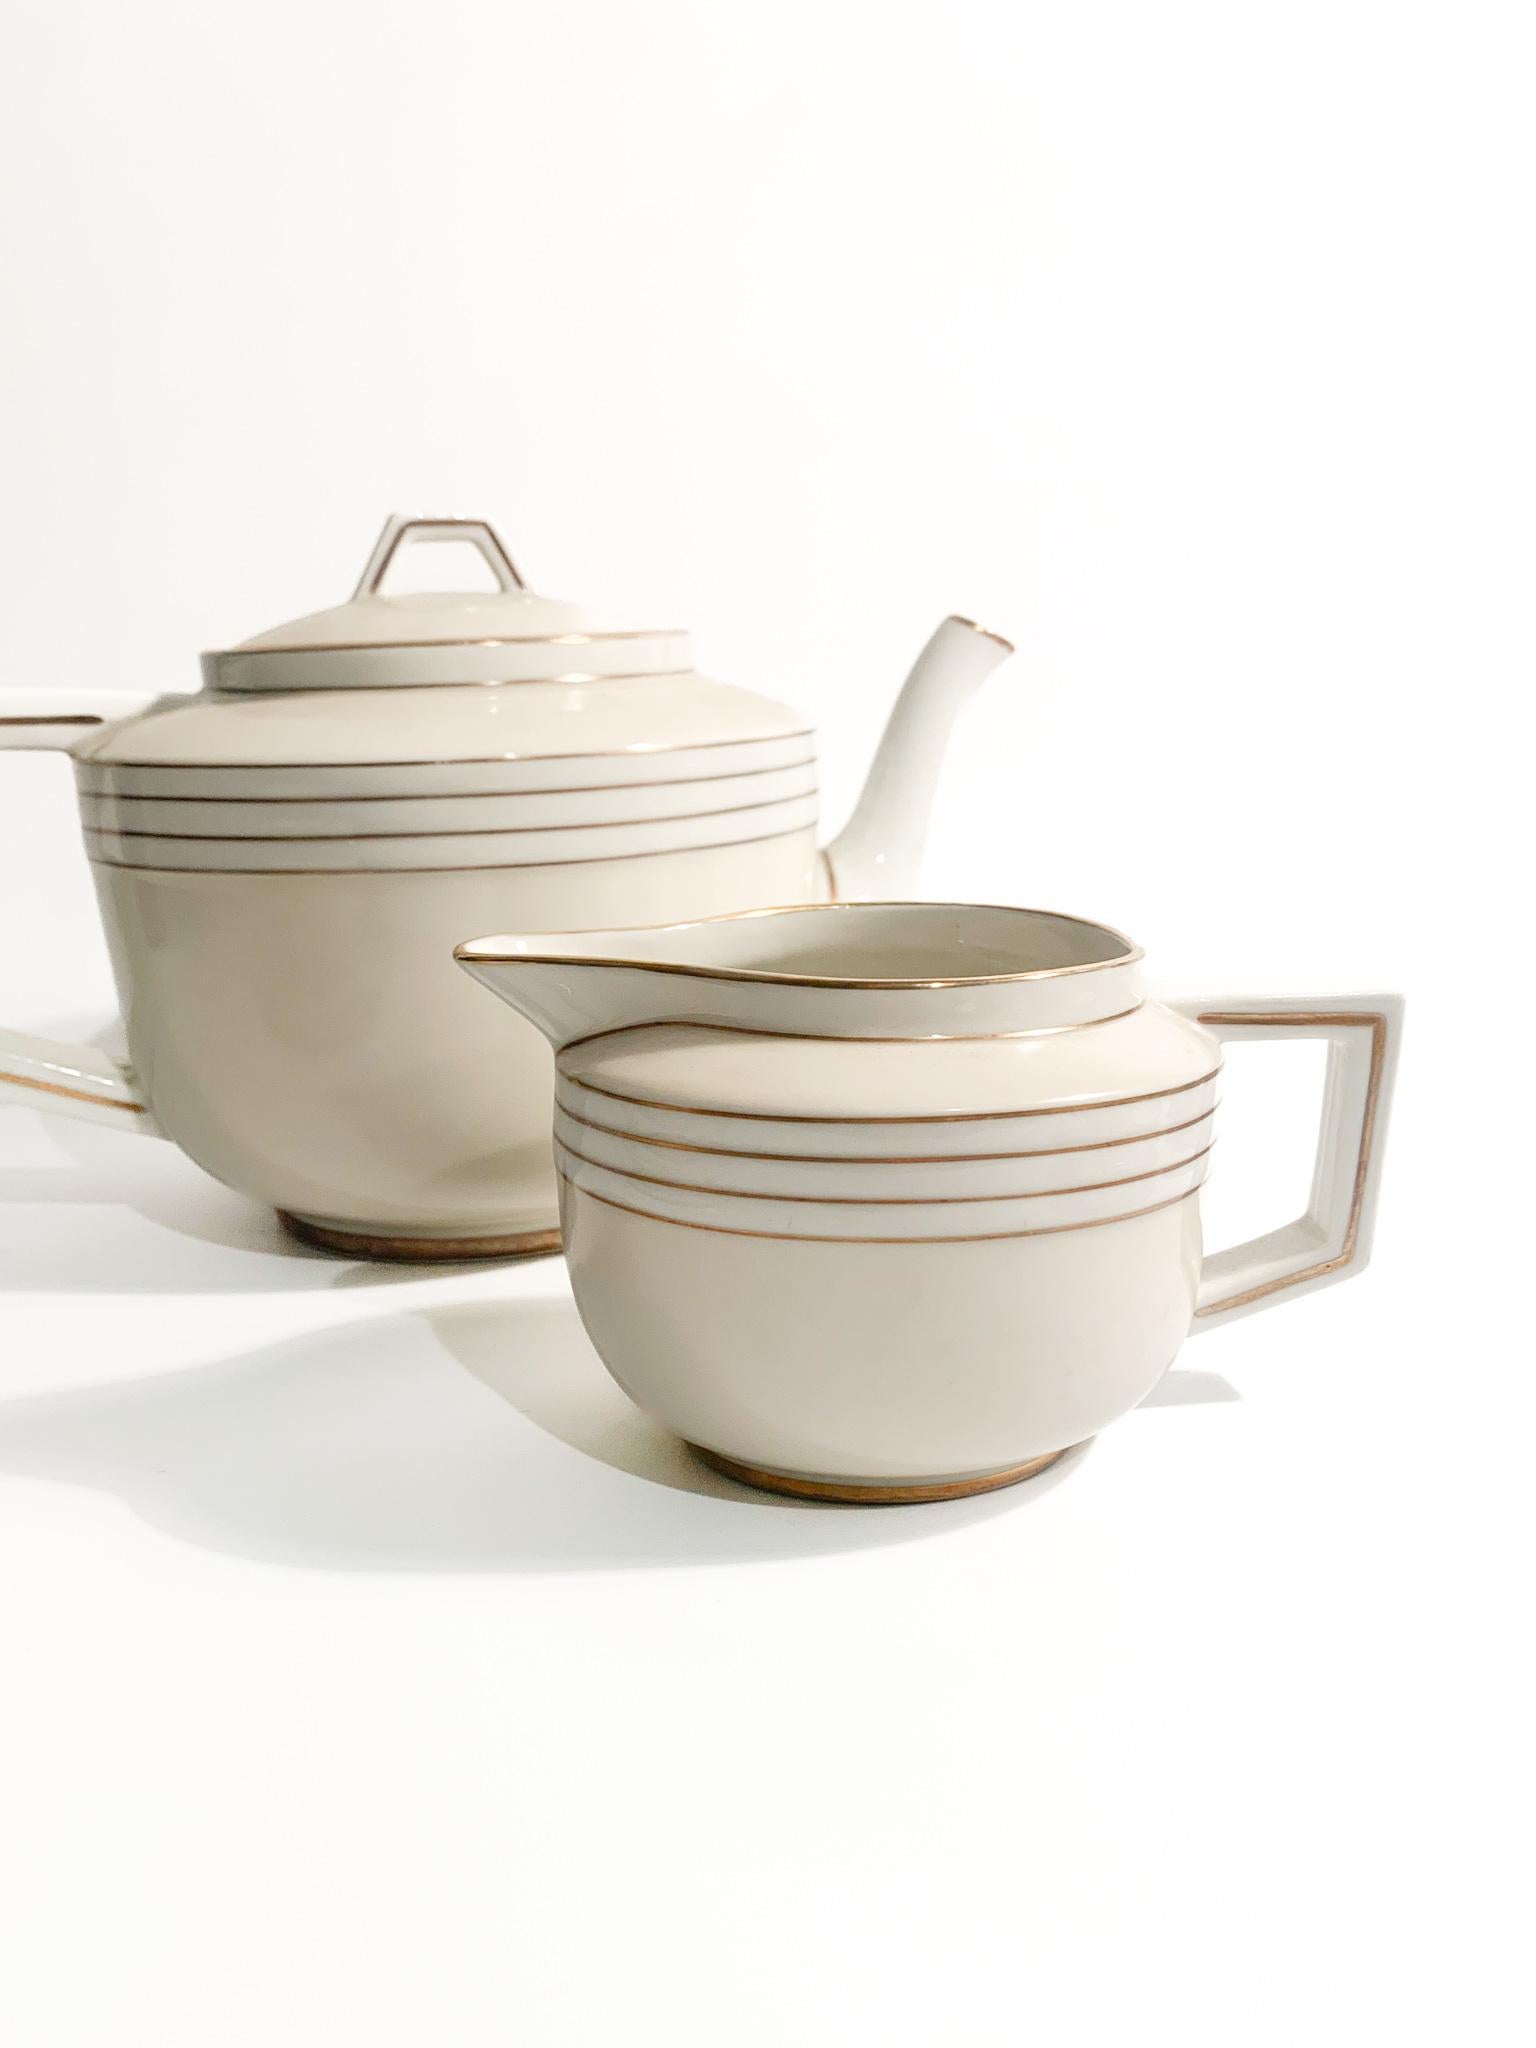 Twelve Richard Ginori Decò Tea Set in Porcelain from the 1940s For Sale 1